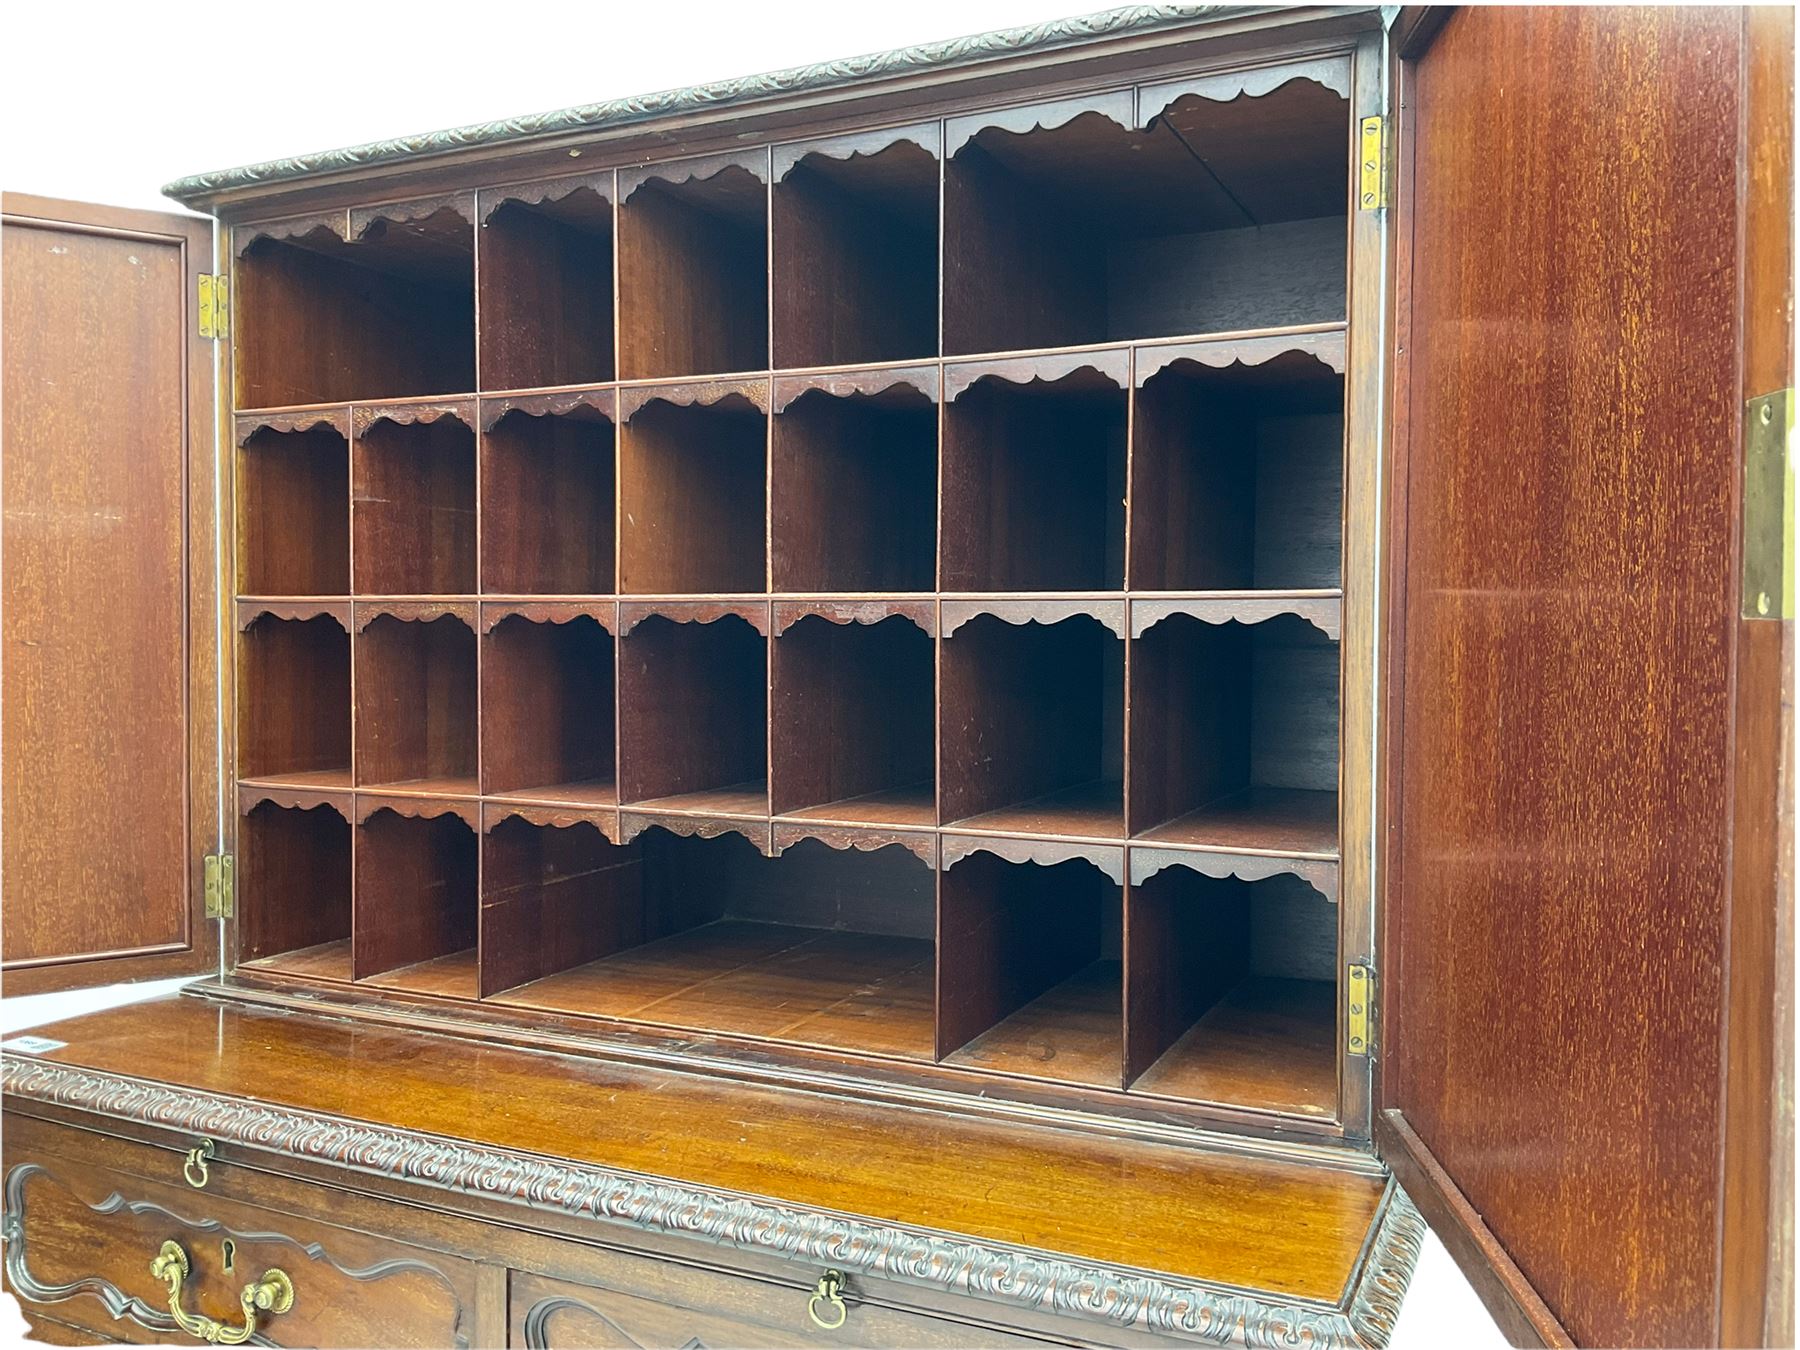 Late 19th century mahogany estate type cabinet - Image 10 of 14